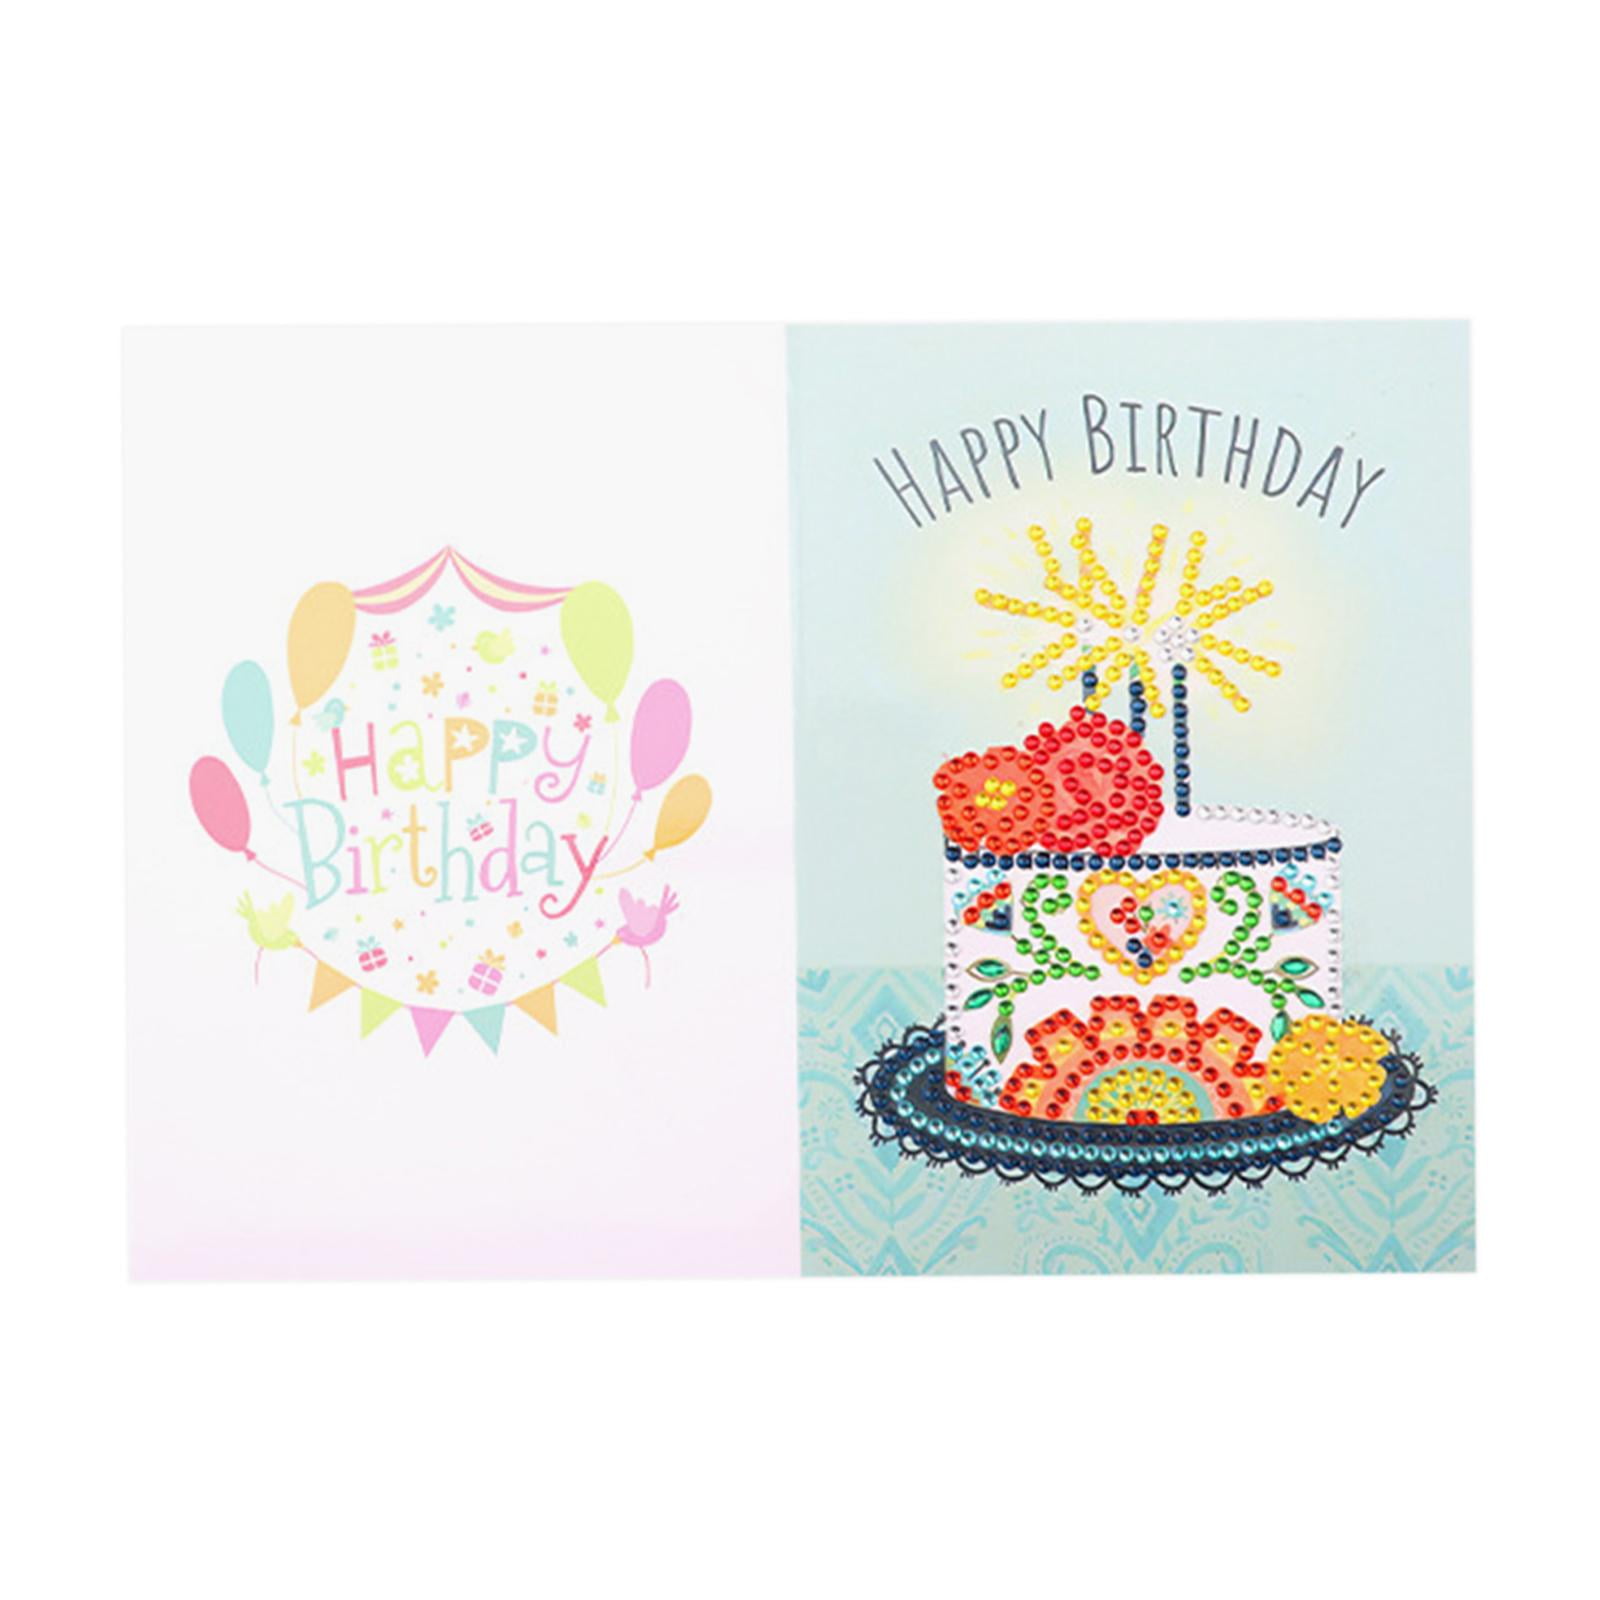 4 Set Die Cuts for Card Making, FineGood Happy Birthday Cutting